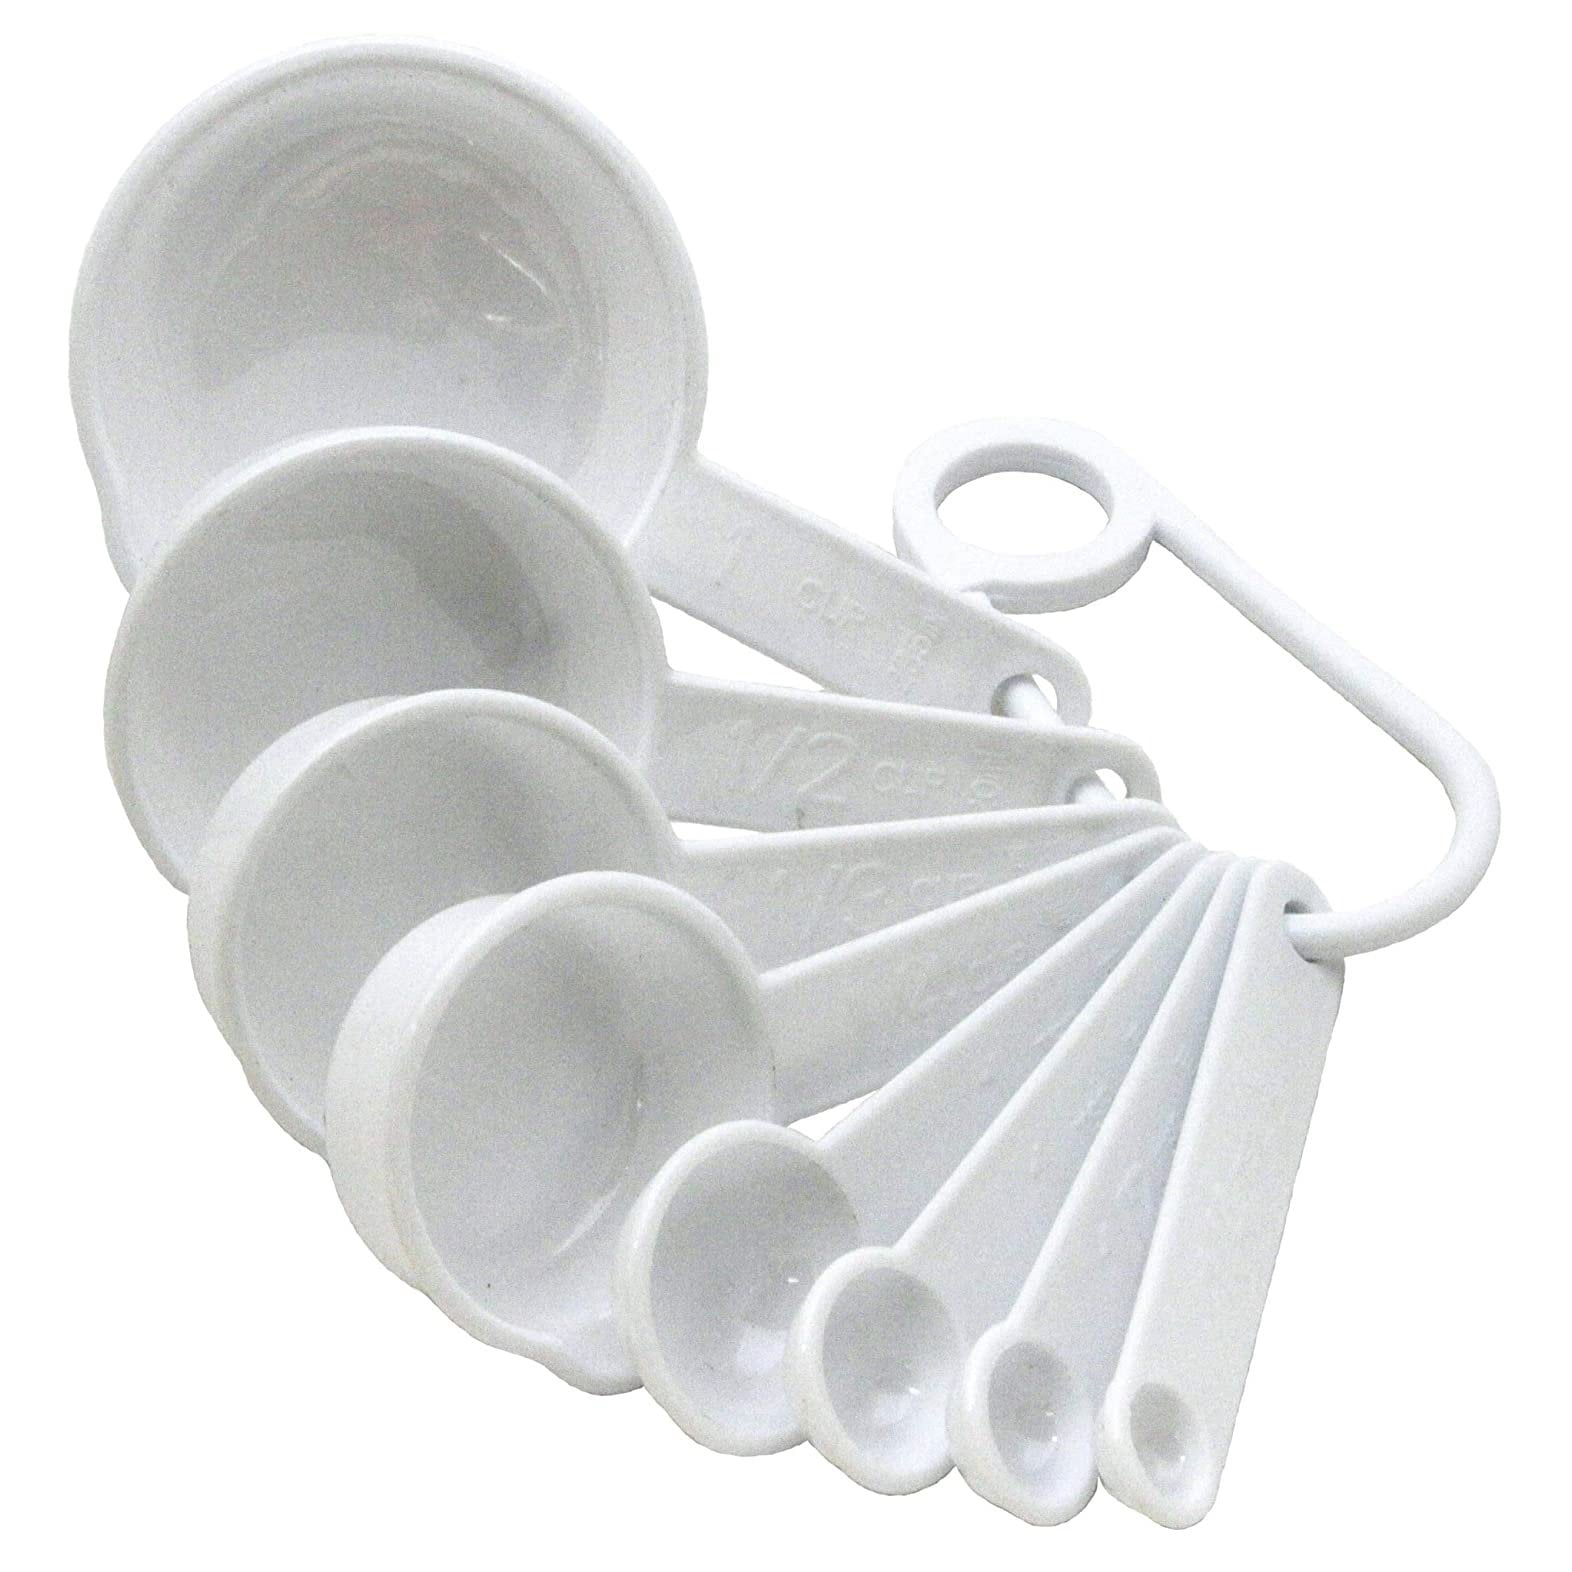 Bonide 4 oz Plastic White Measuring Cup